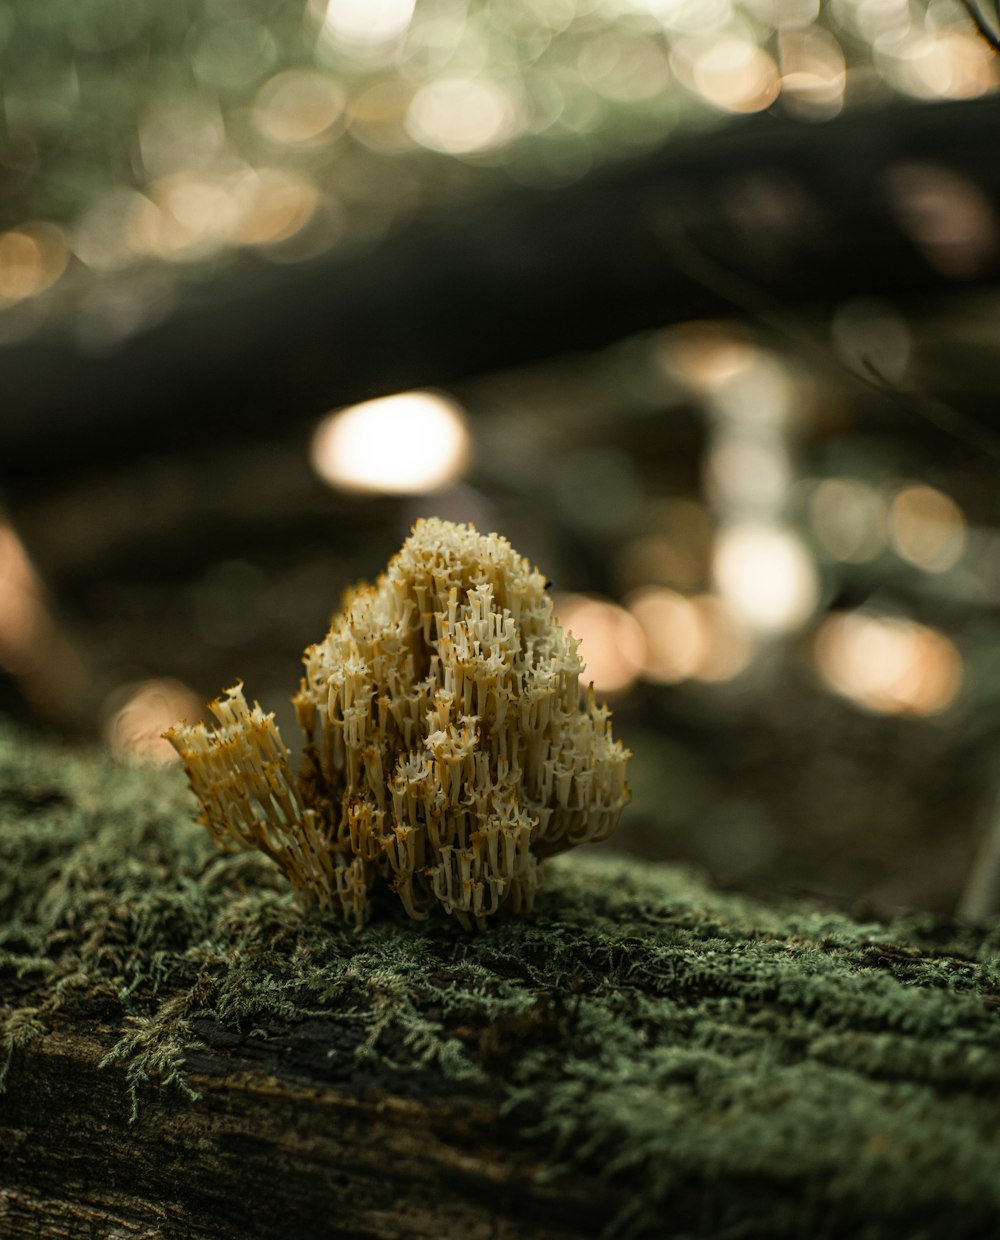 a close up of a mushroom on a tree trunk